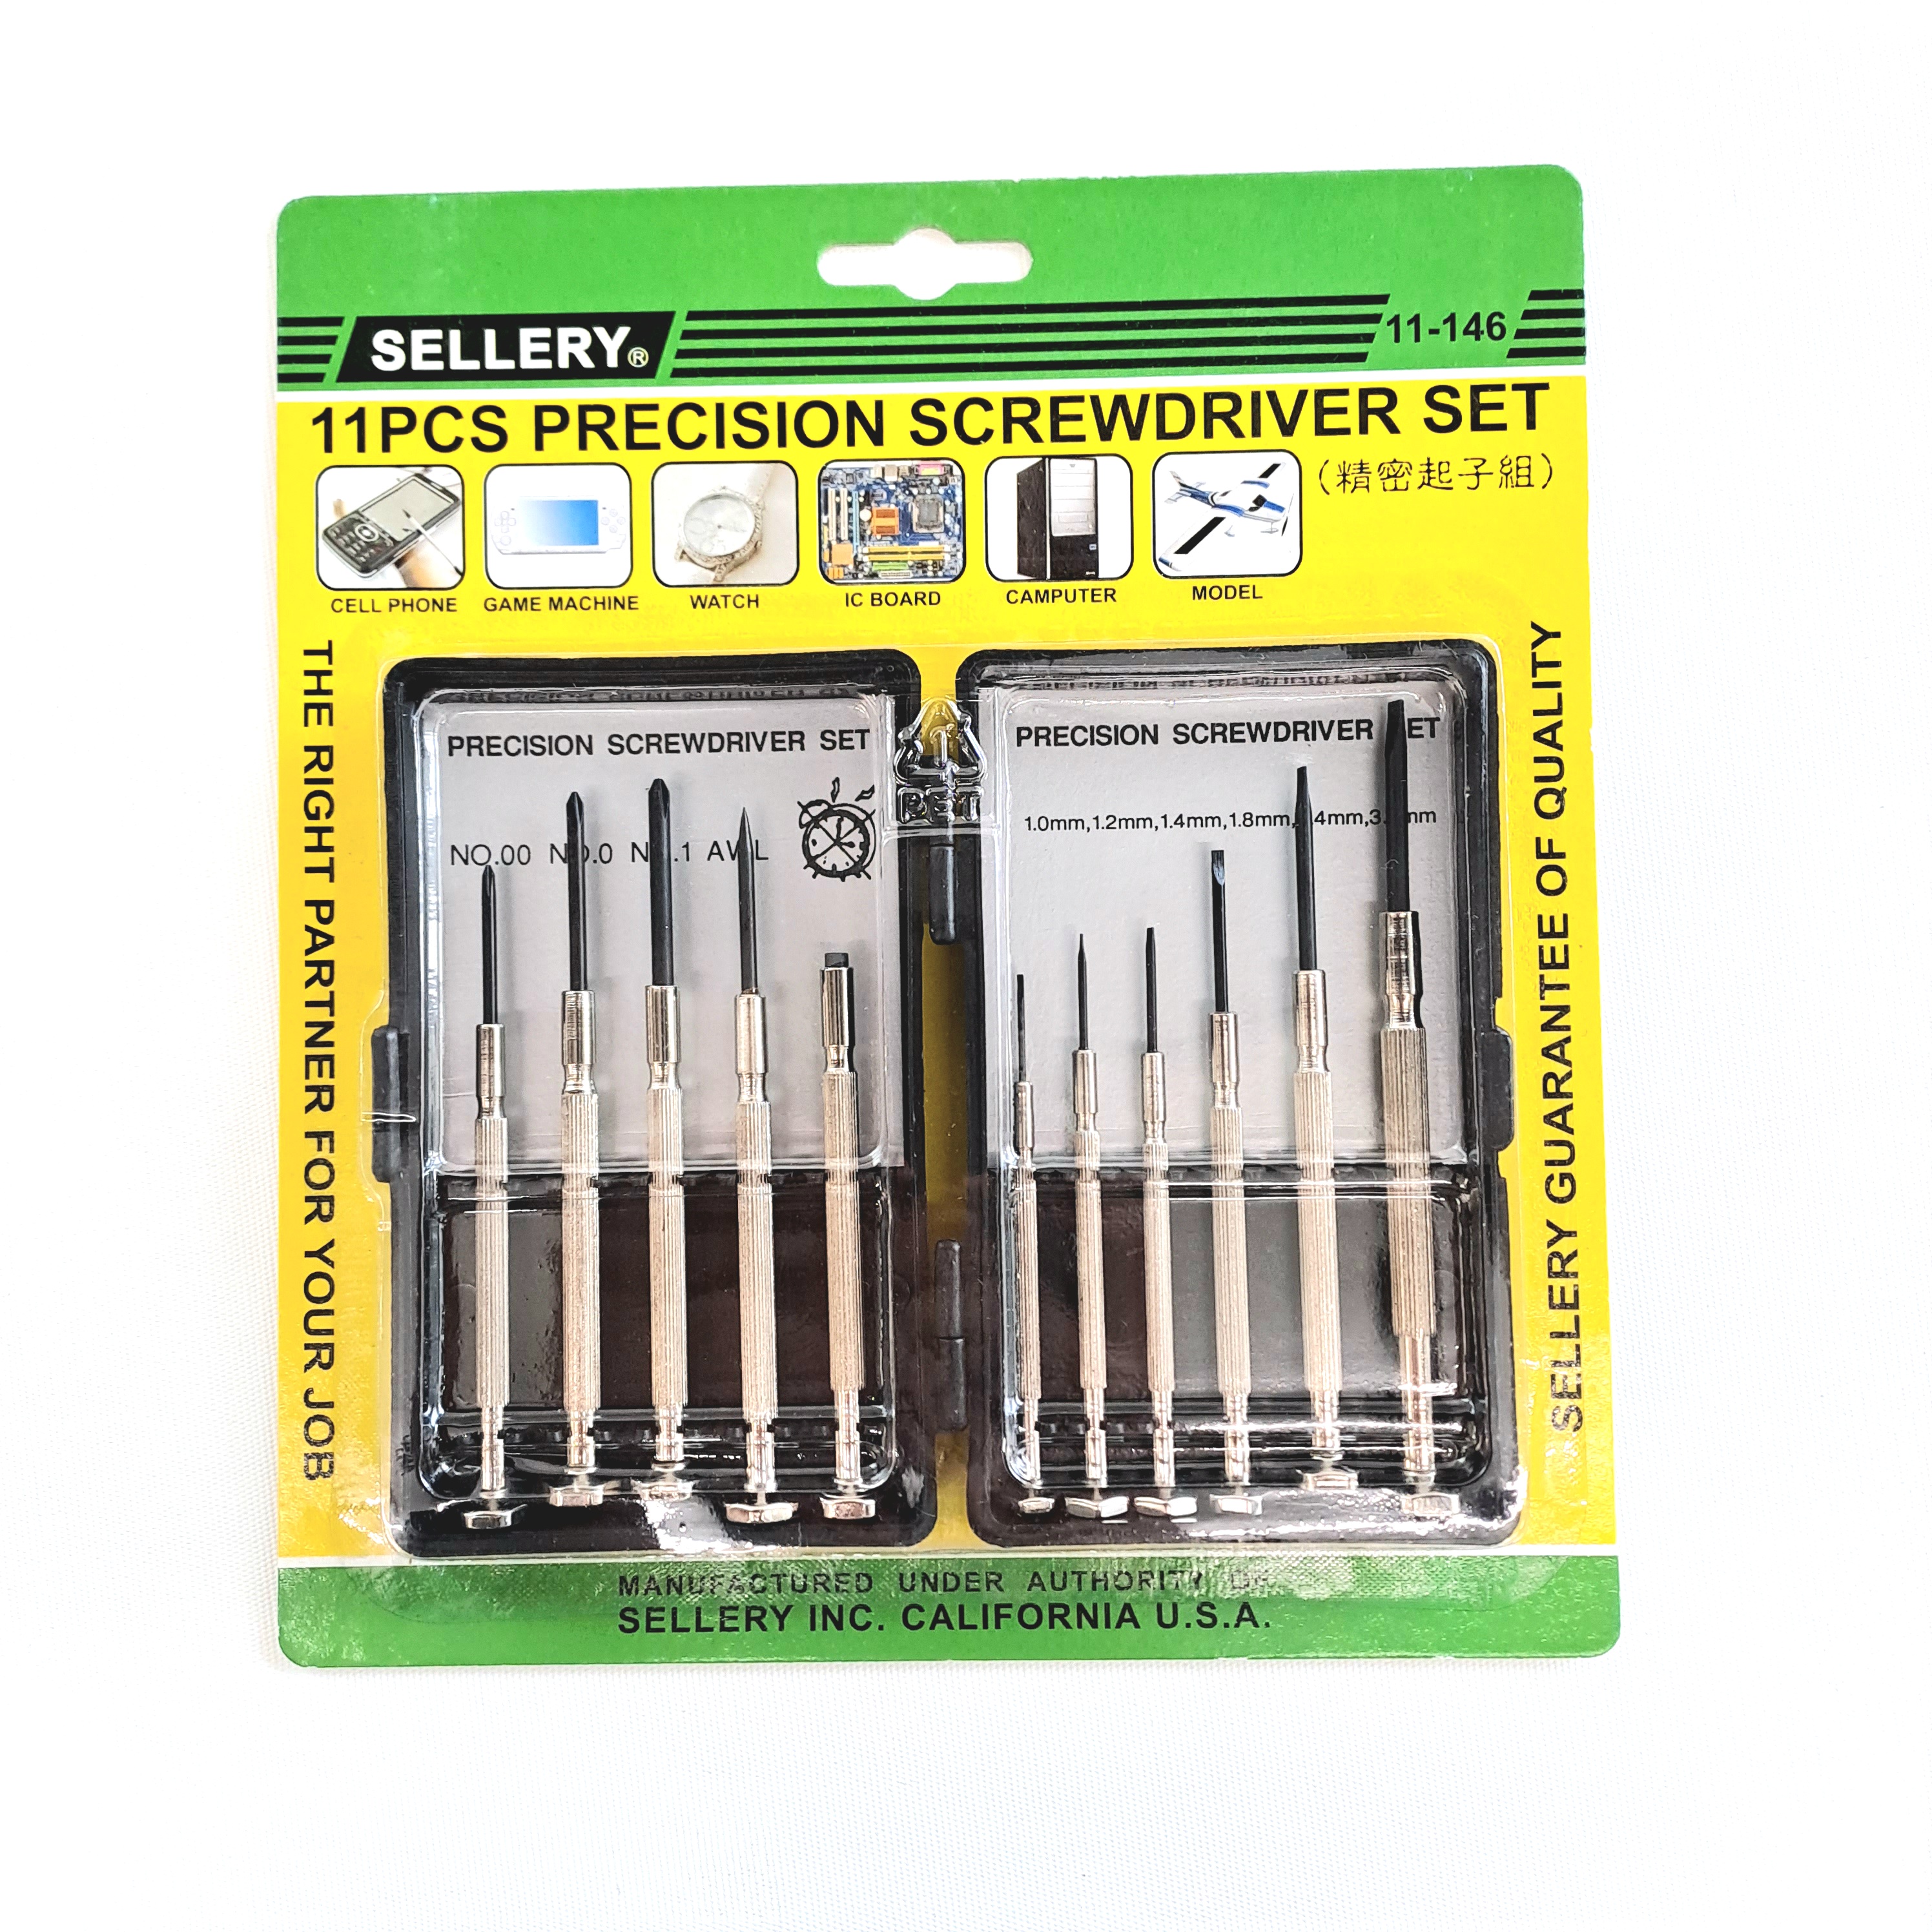 Sellery 11-146 11pcs Precision screwdriver set